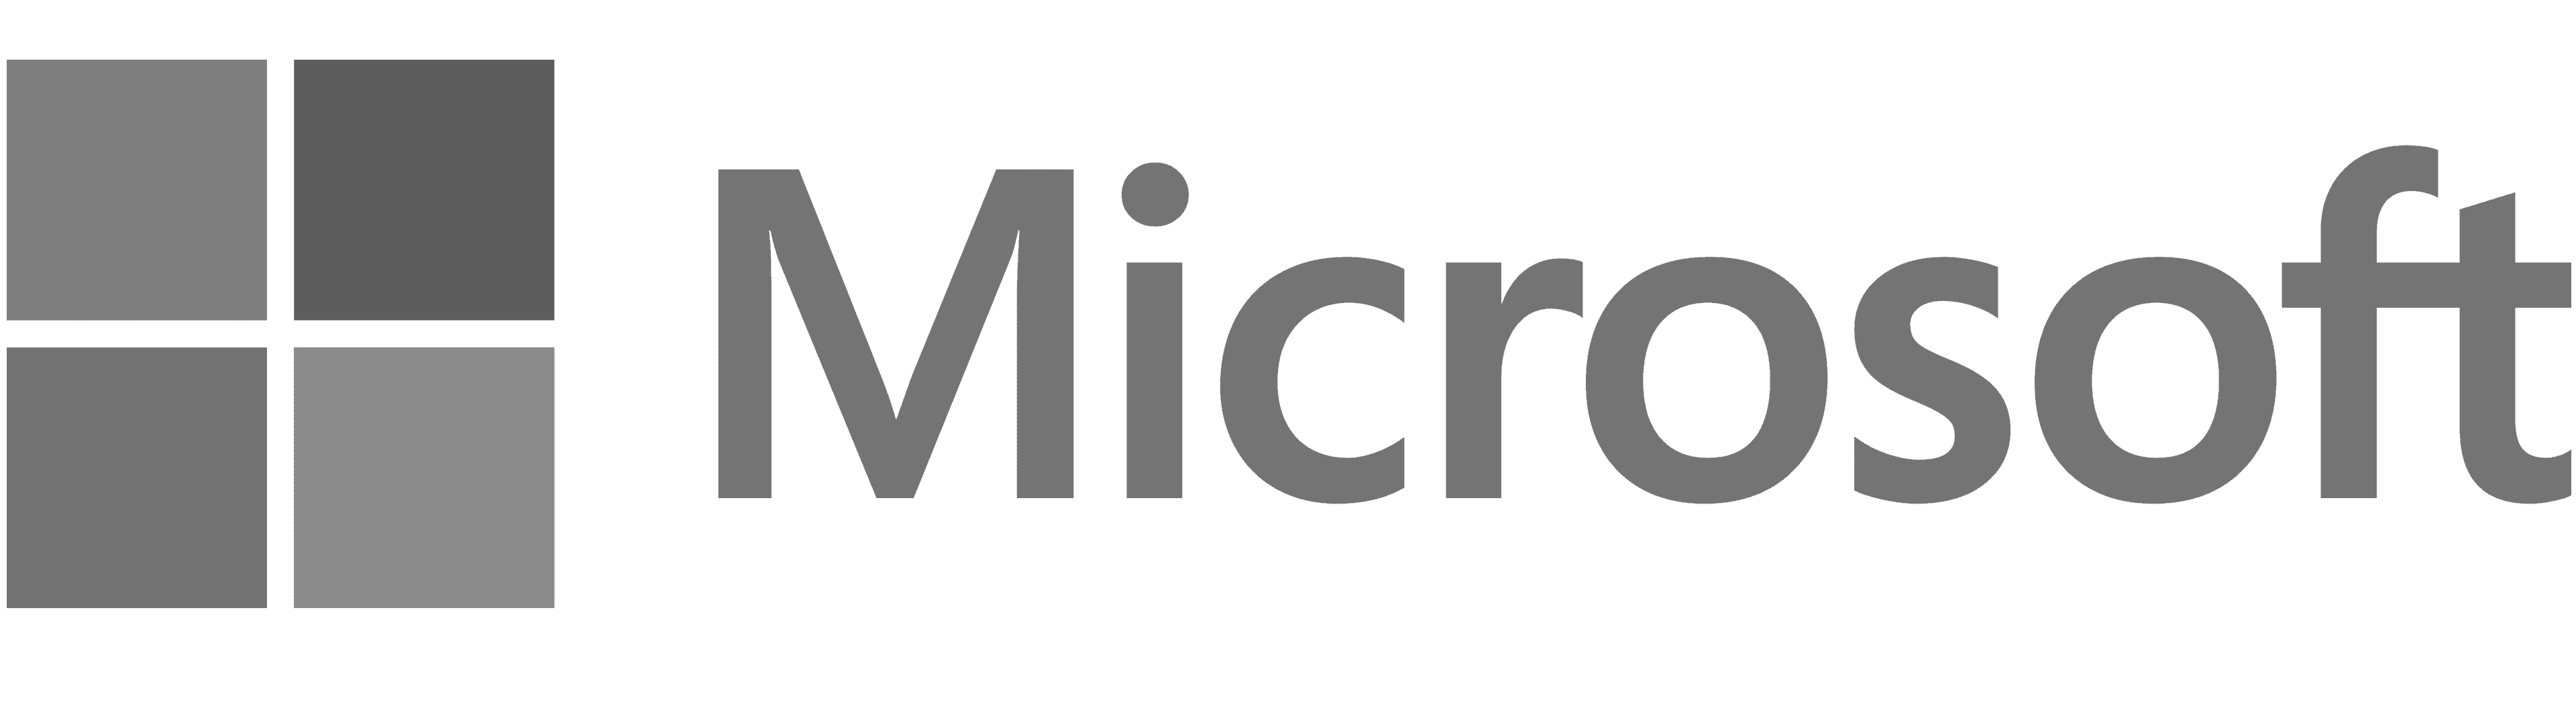 Microsoft-Logo gray